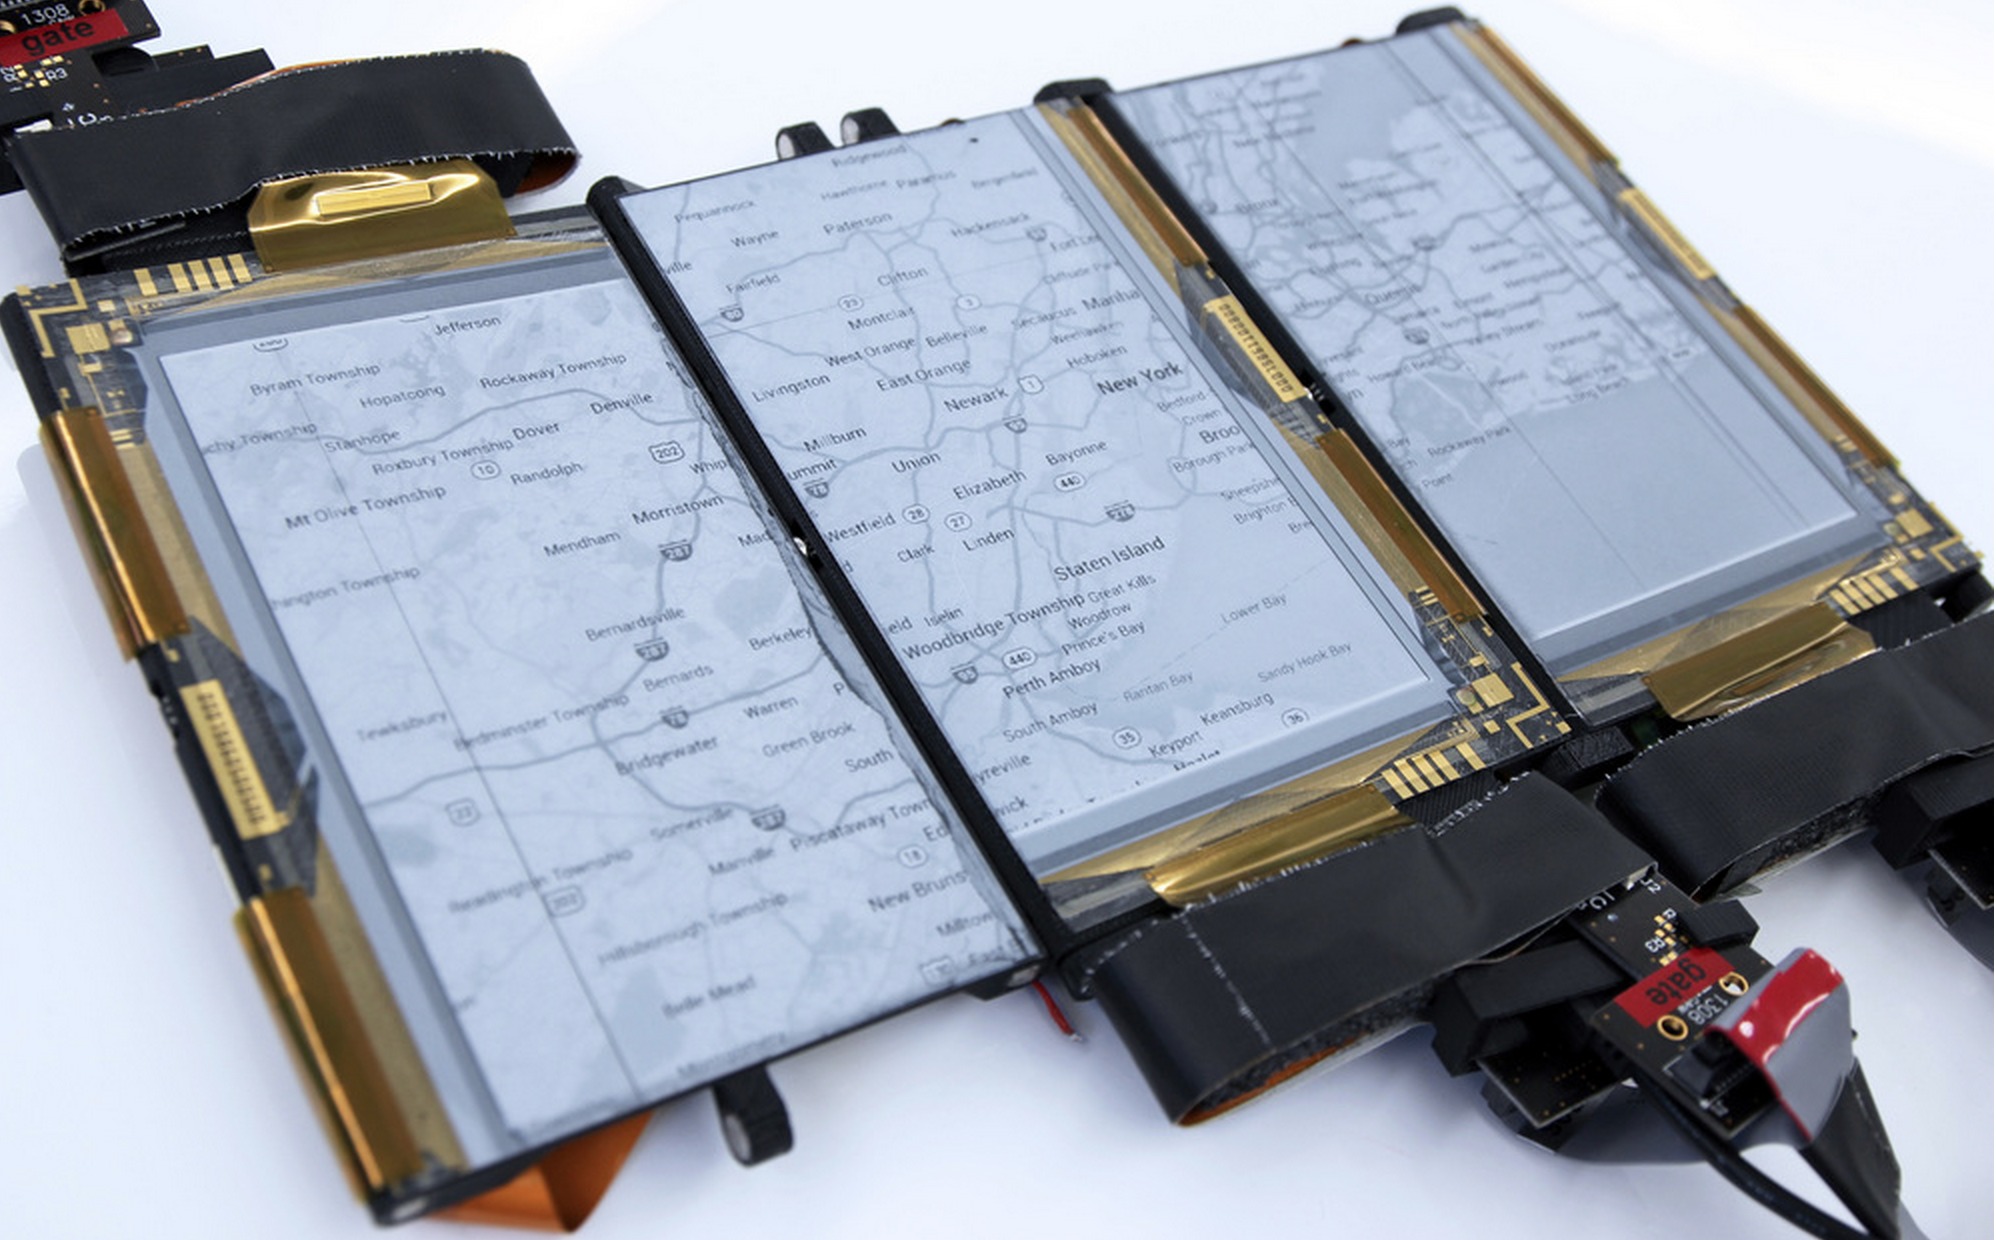 Introducing paperfold: flip smart phones